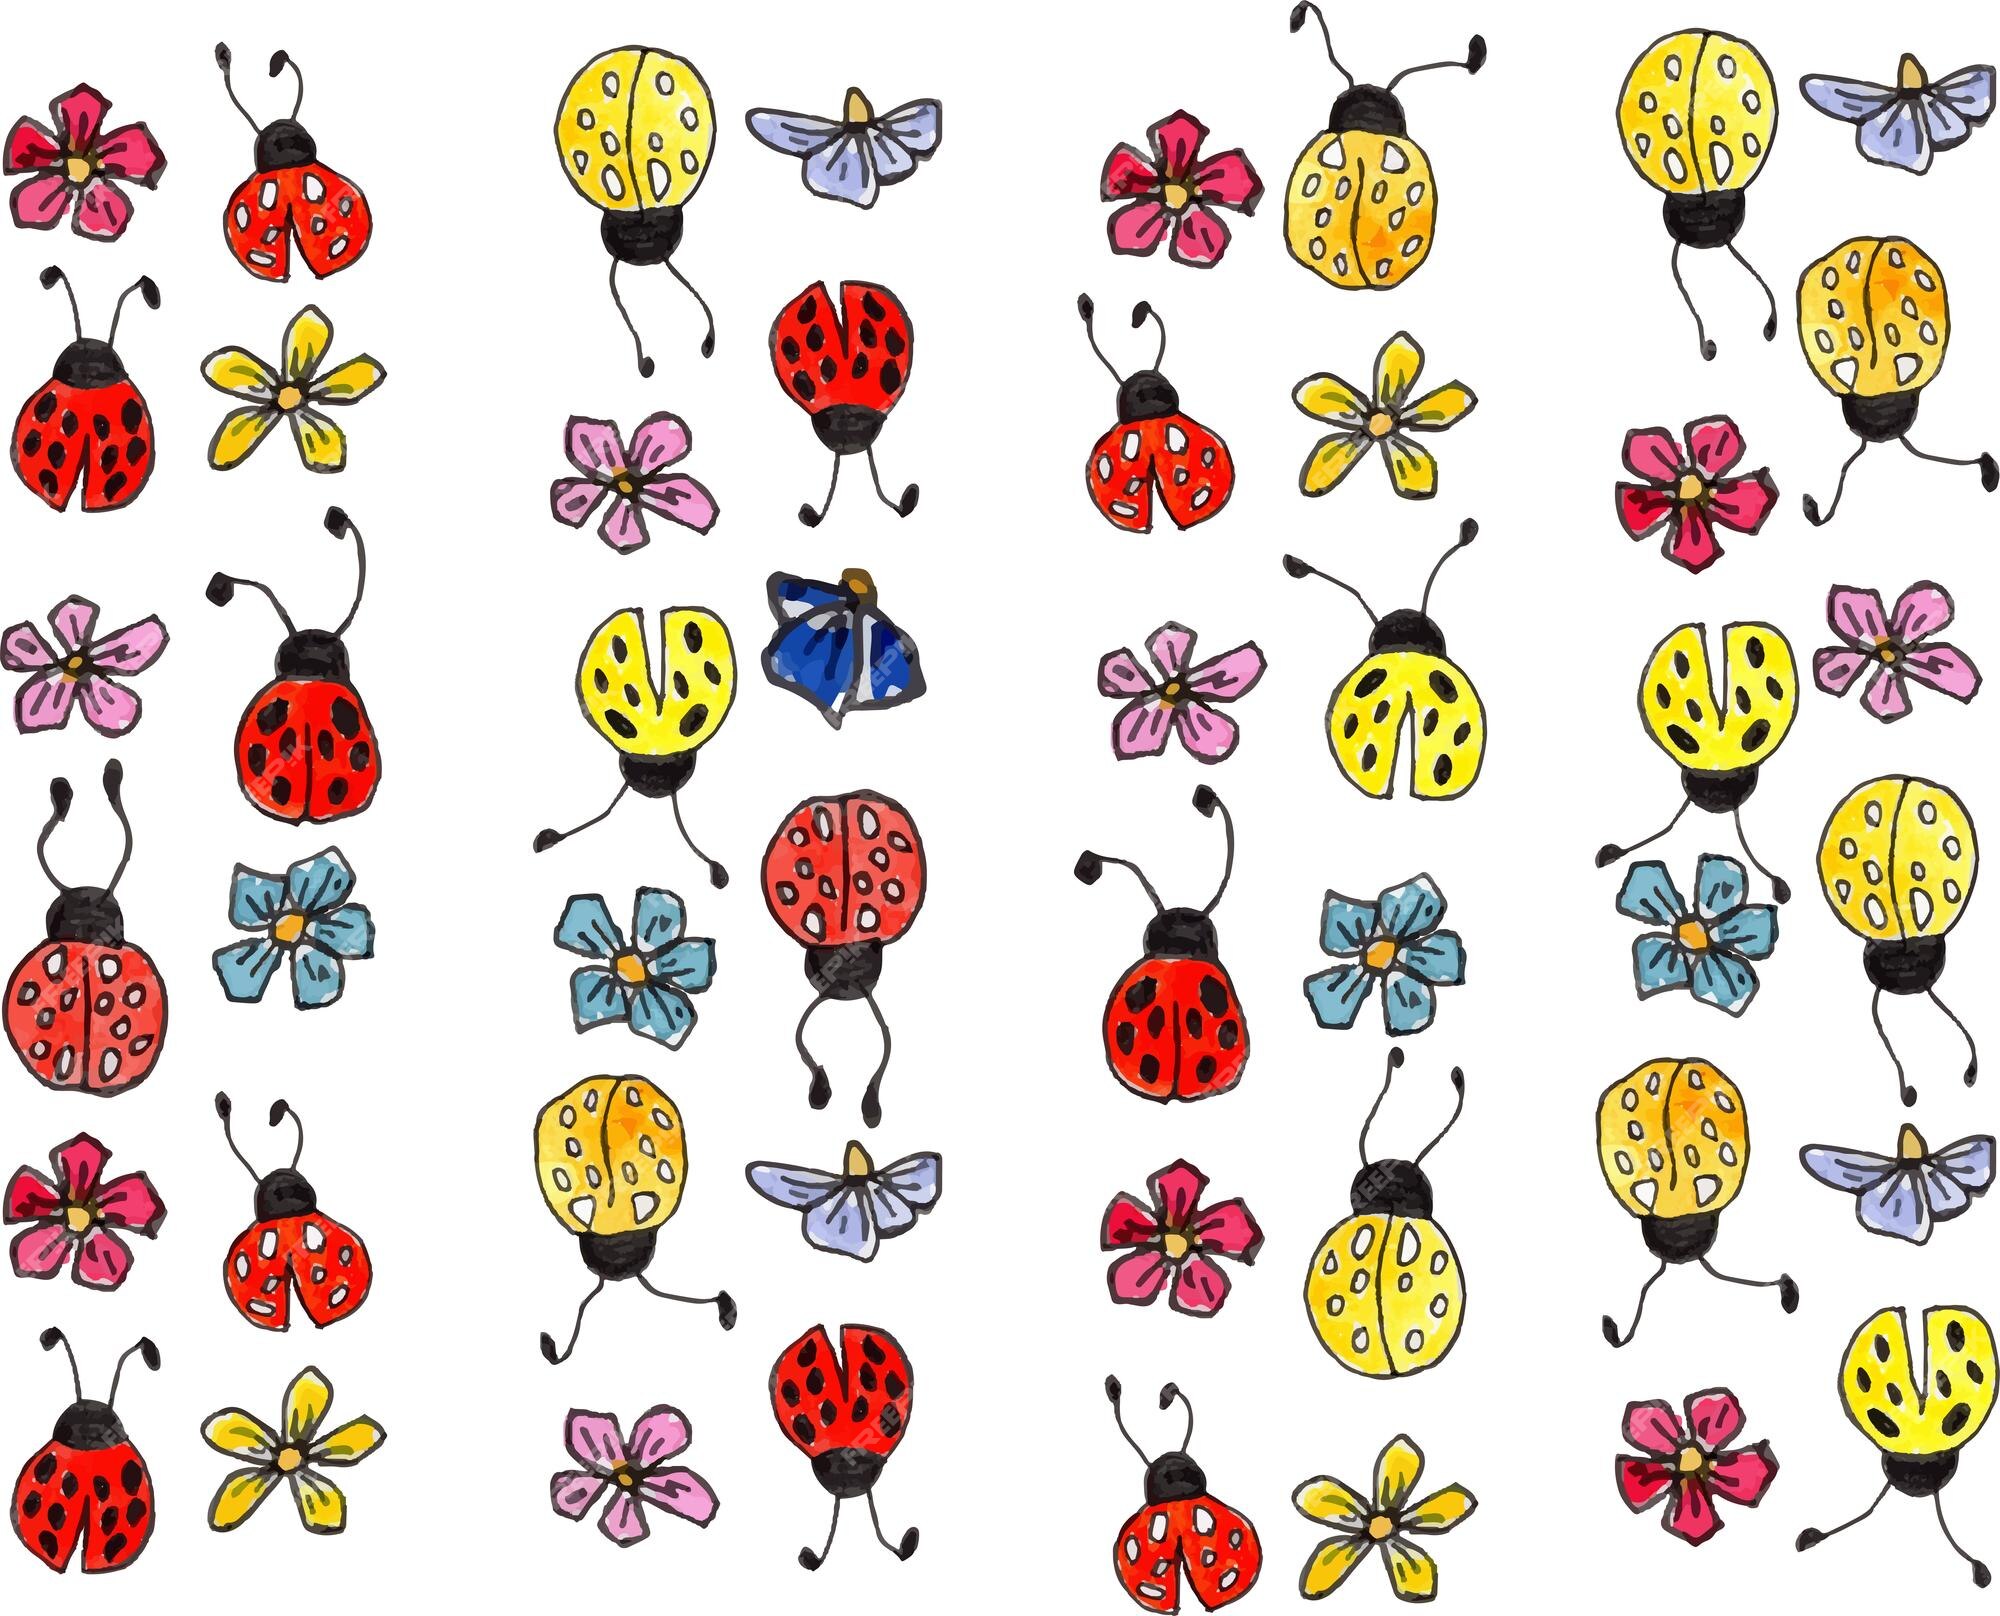 Ladybug drawing Vectors & Illustrations for Free Download | Freepik